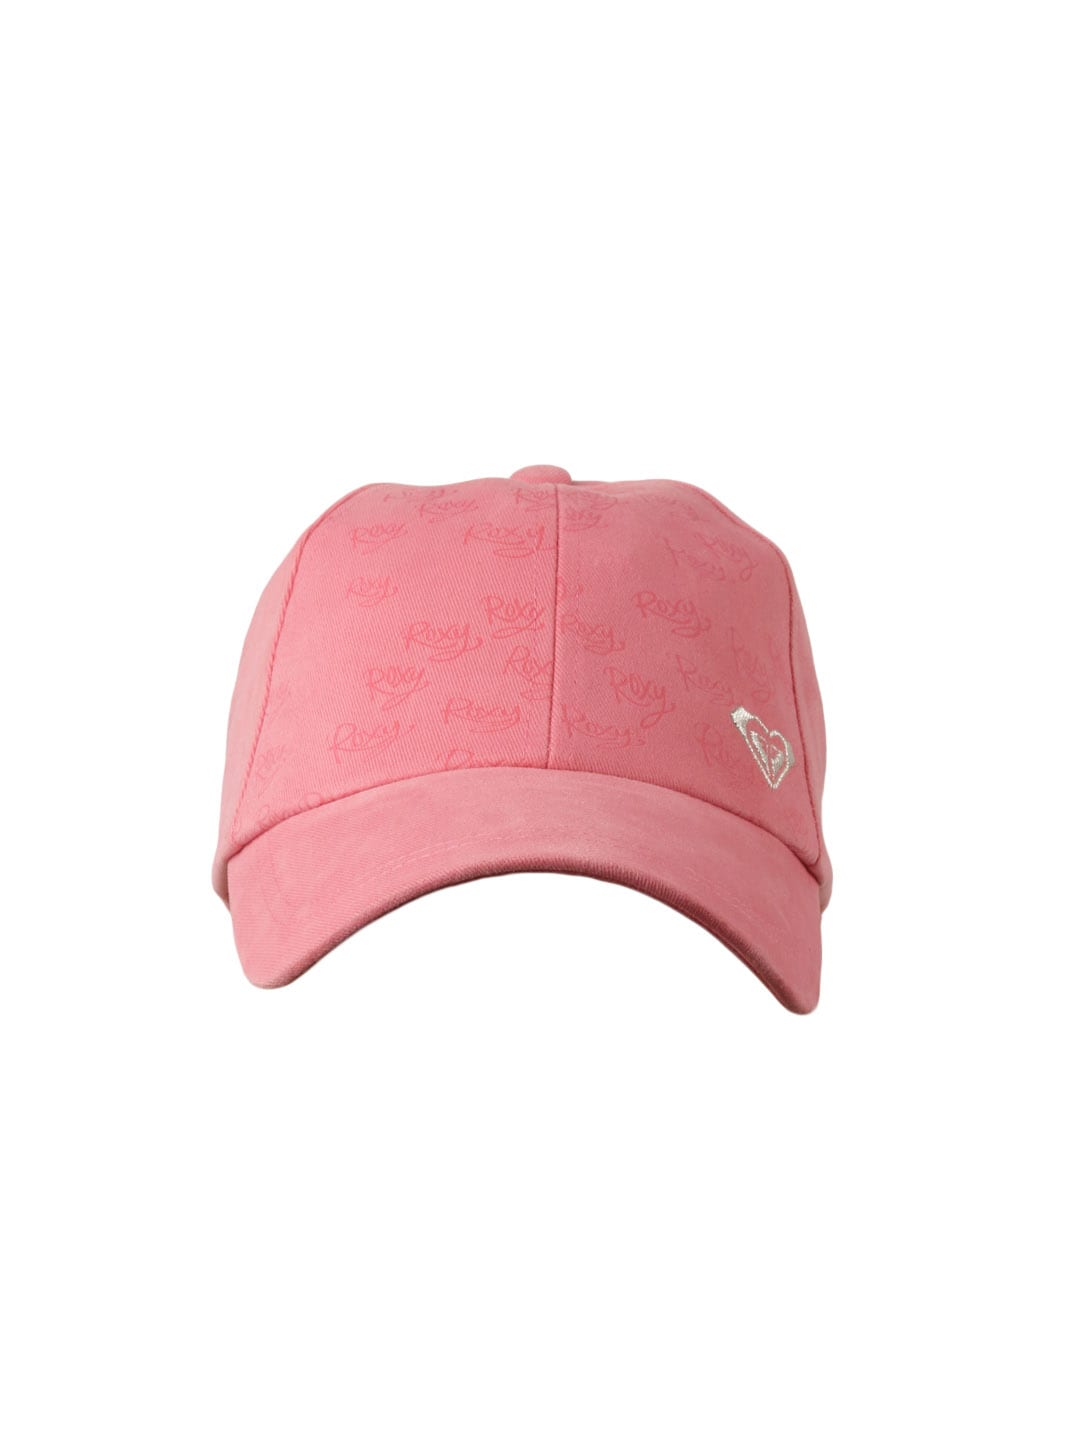 Roxy Women Pink Cap